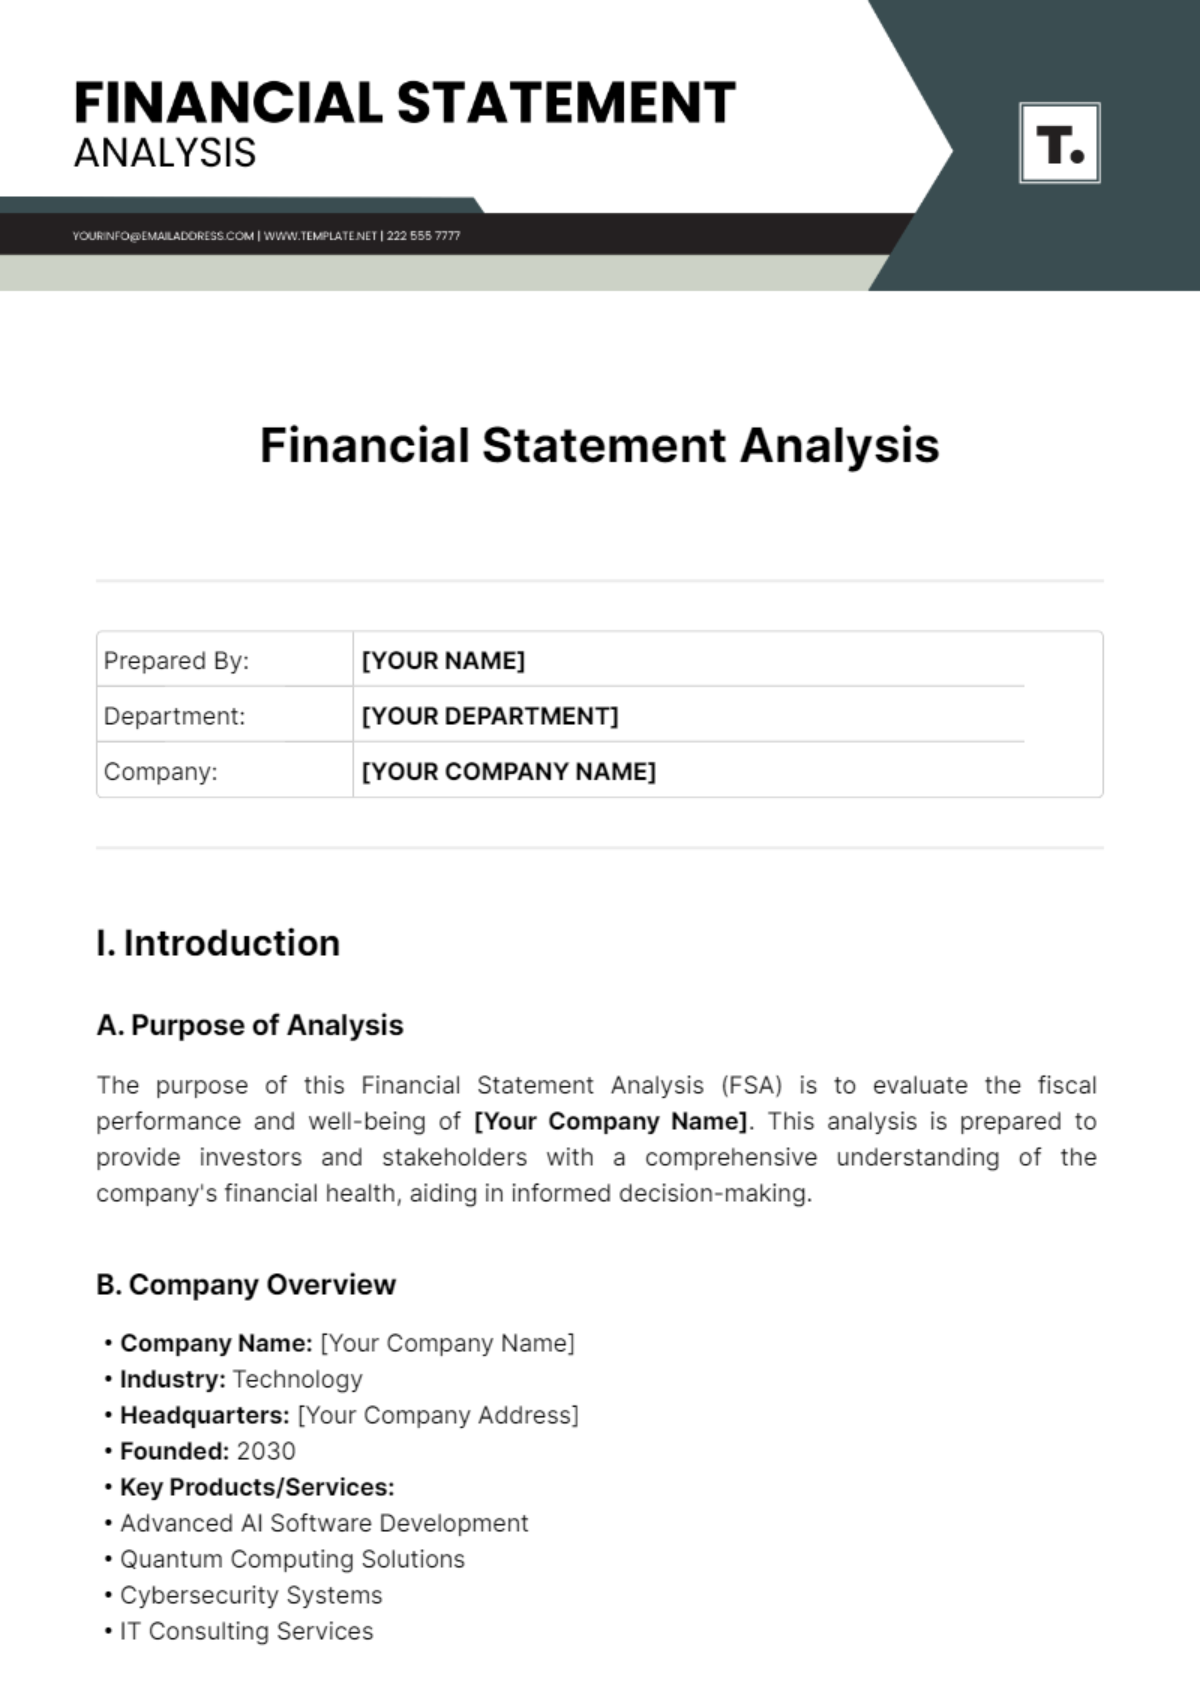 Financial Statement Analysis Template